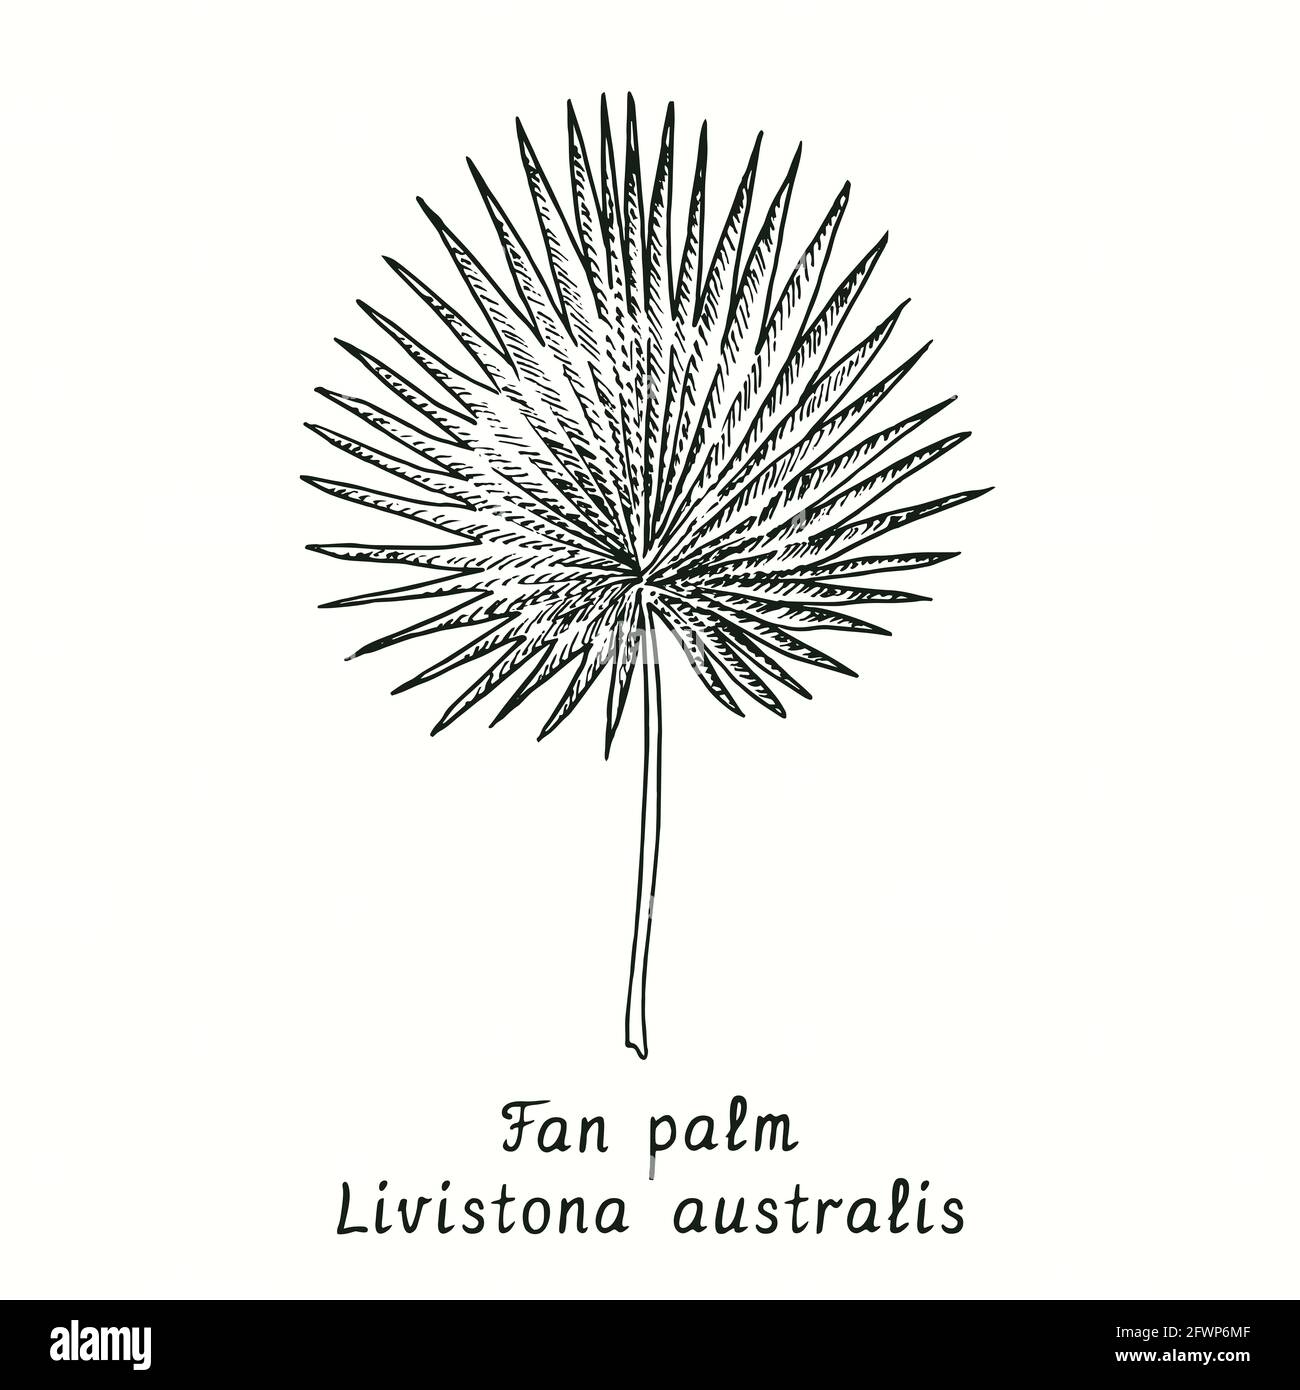 Fan palm (Livistona australia) leaf. Ink black and white doodle drawing in woodcut style. Stock Photo